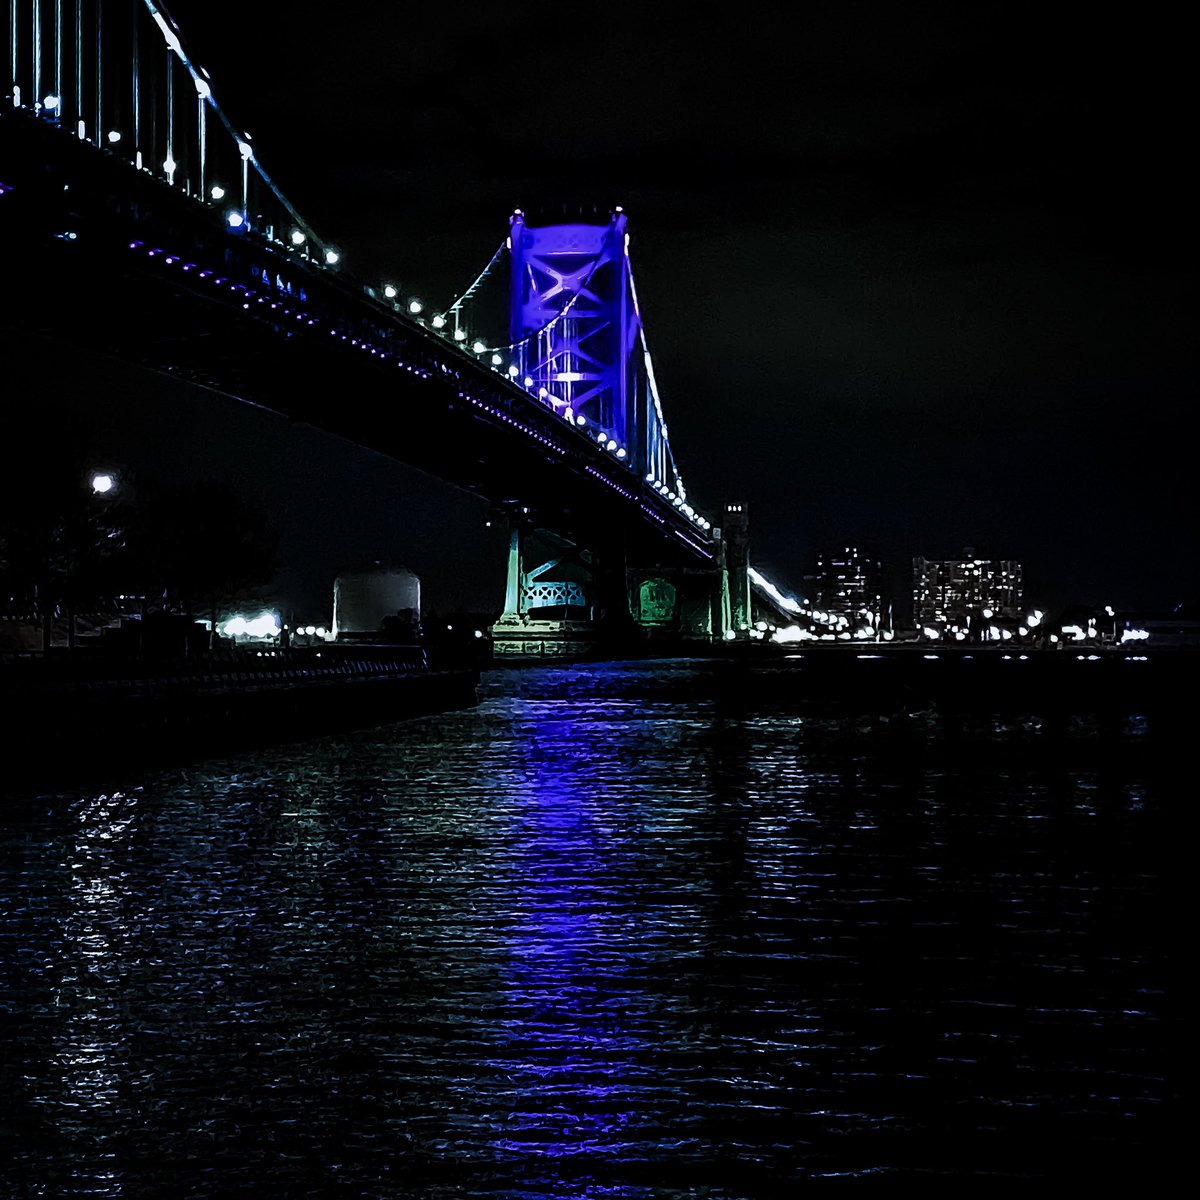 Ben Franklin glows sometimes #streetphotography #PHLphoto #photooftheday #PhotographyIsArt #phillyphotographer #Philly #Philadelphia #benjaminfranklinbridge #bridgesofphilly